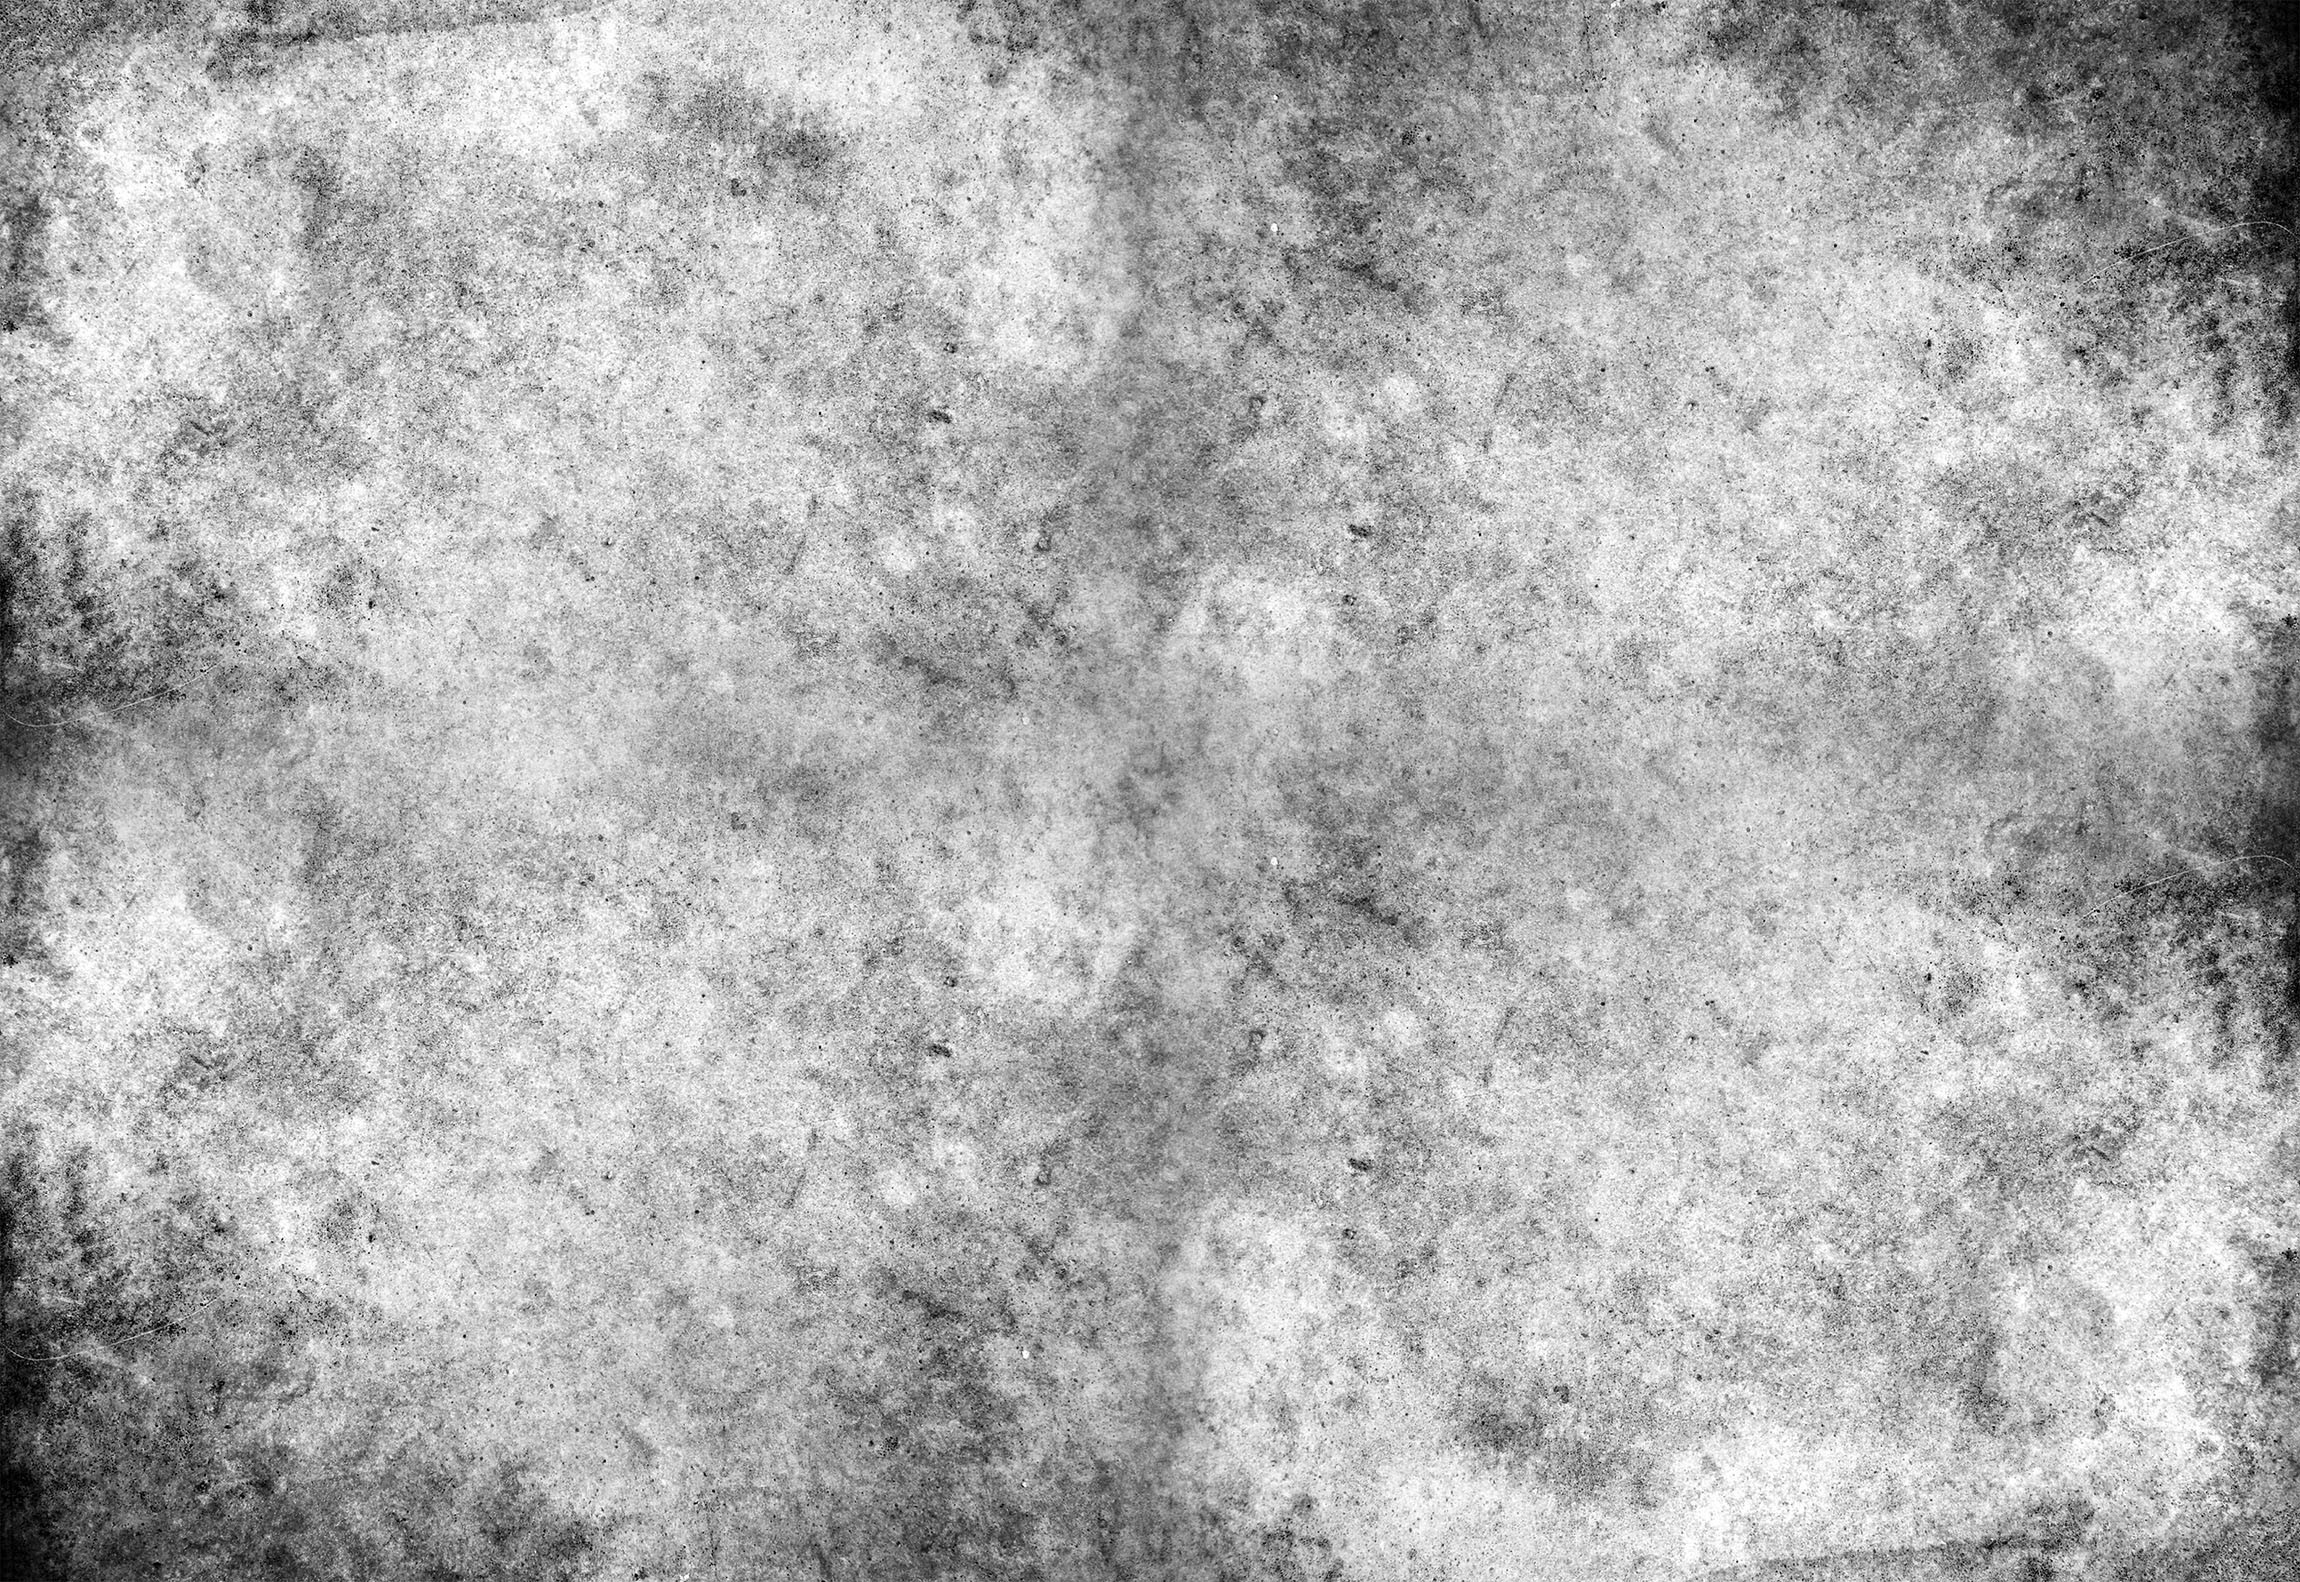 2300x1582 Black White Grunge Concrete Texture Desktop Wallpaper Uploaded by rodfranco